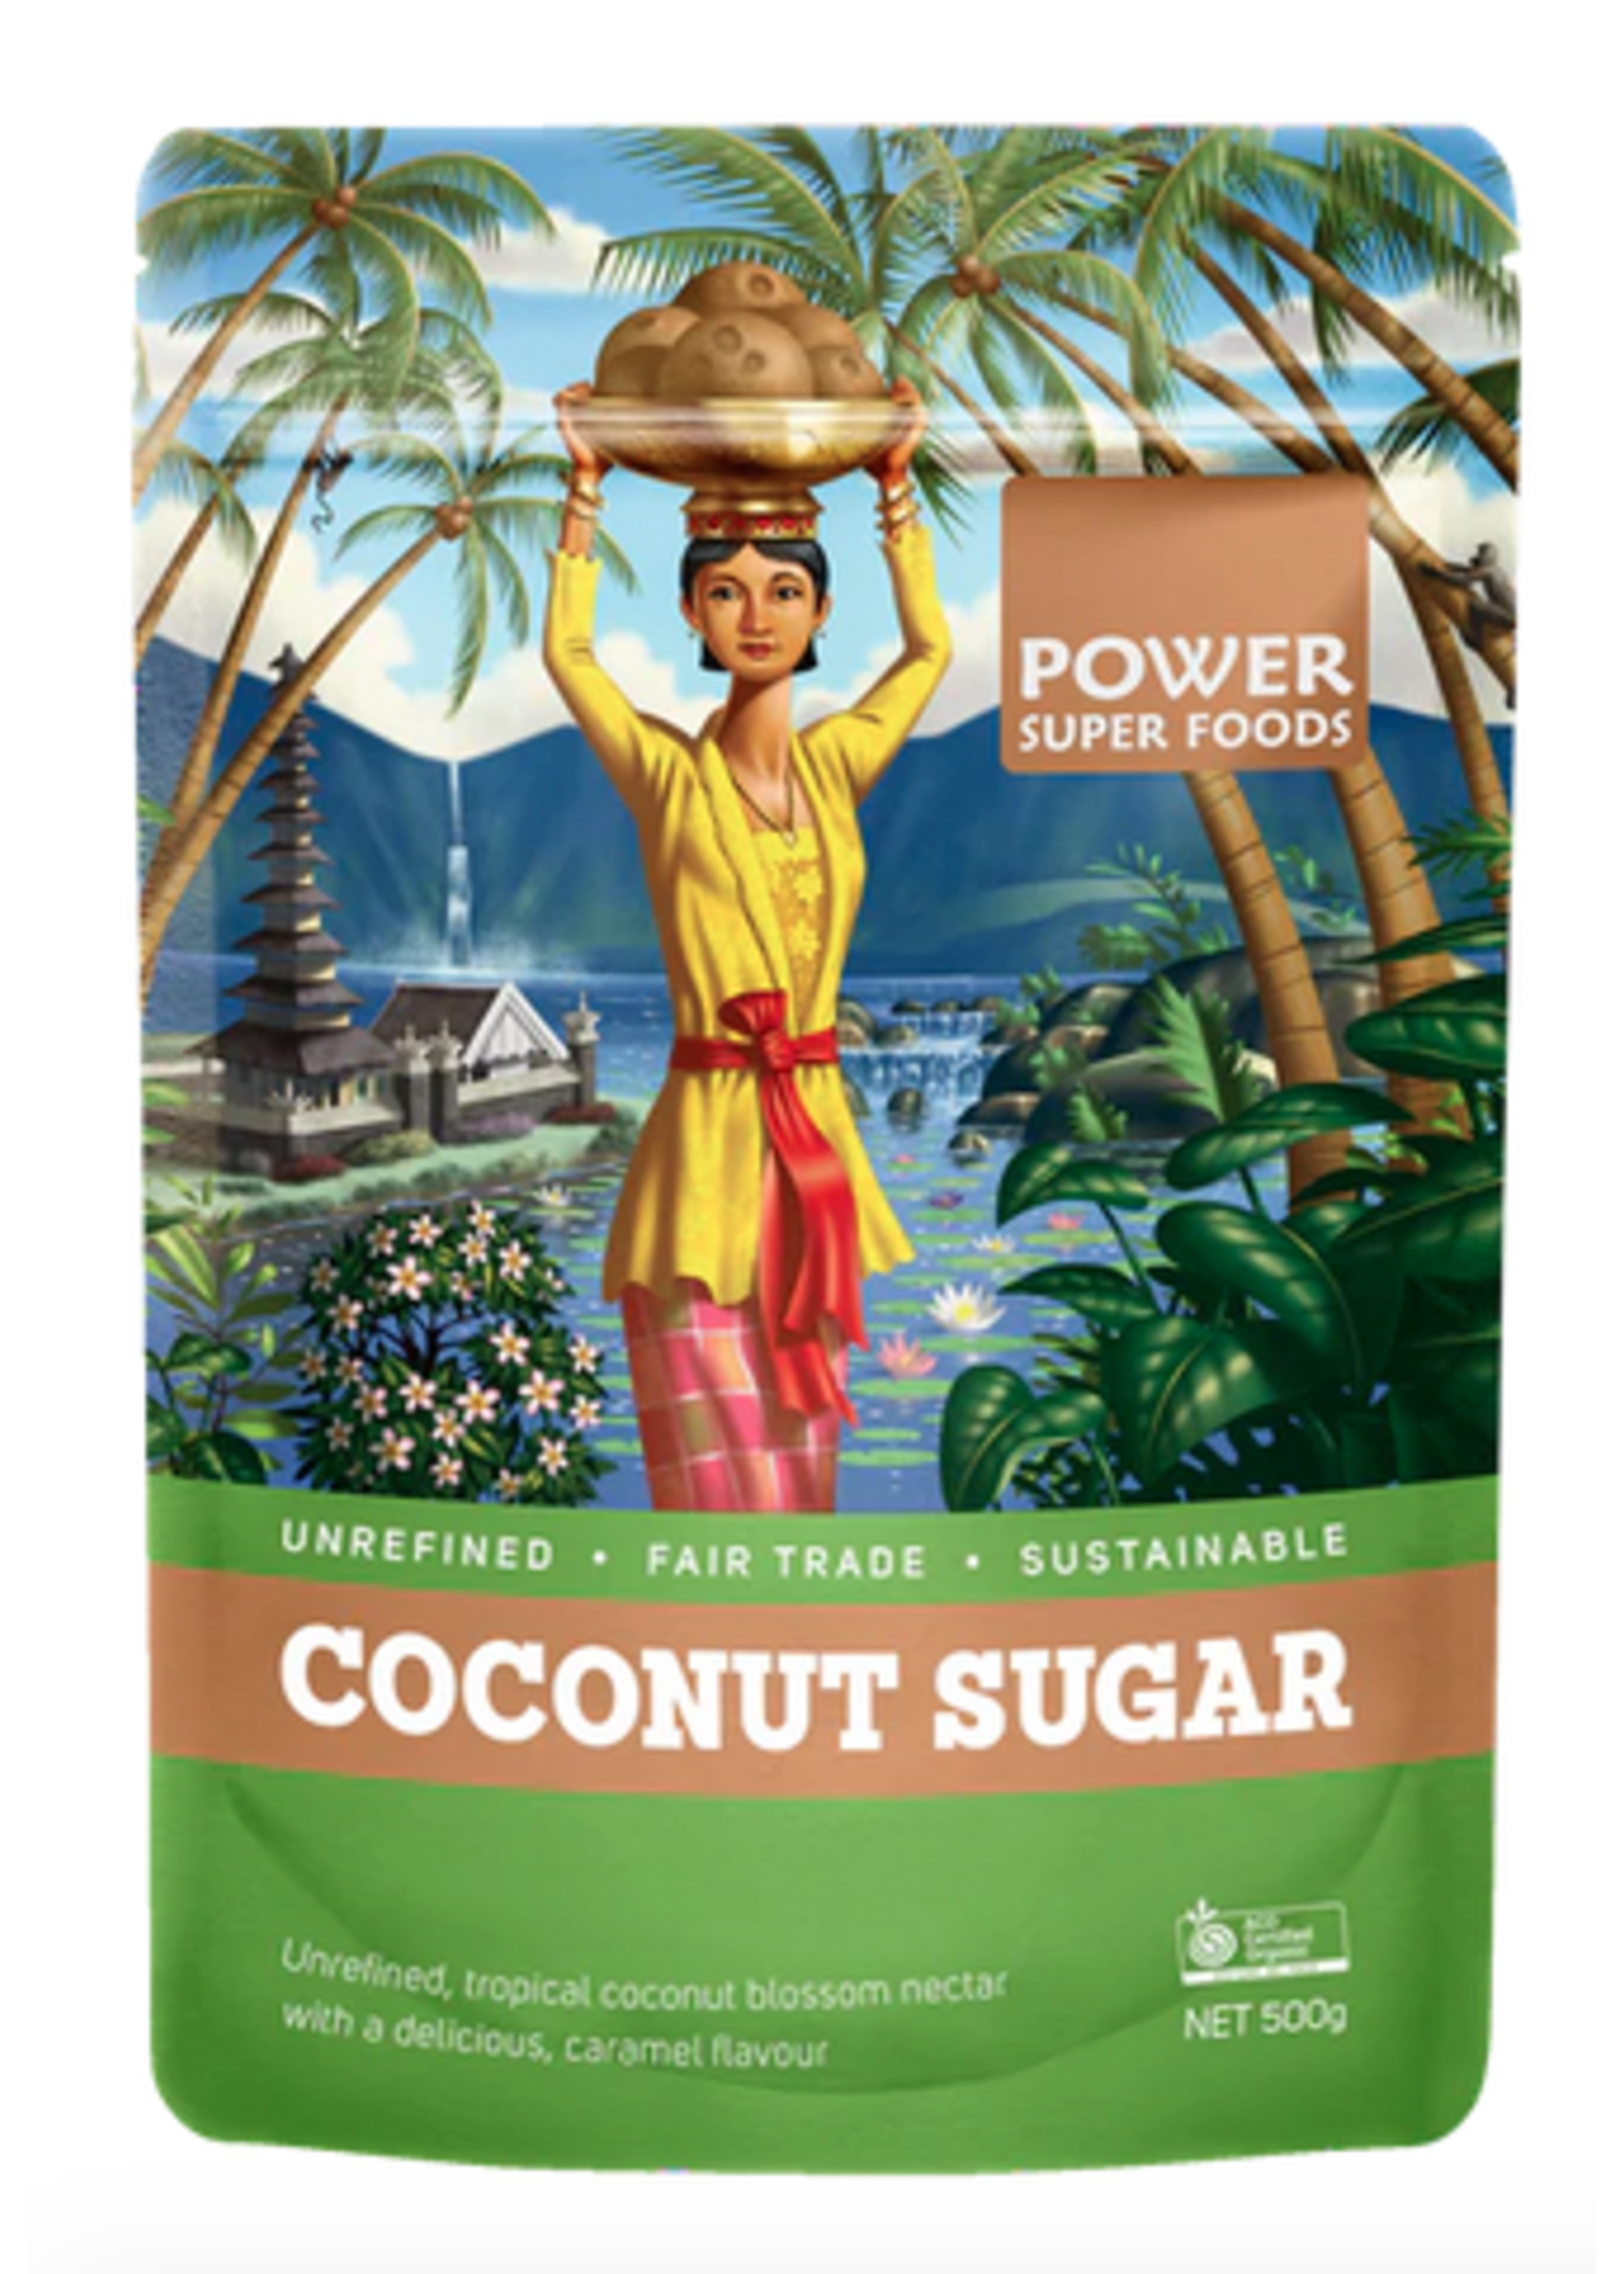 POWER SUPER FOODS Power Superfoods Organic Coconut Sugar 200g